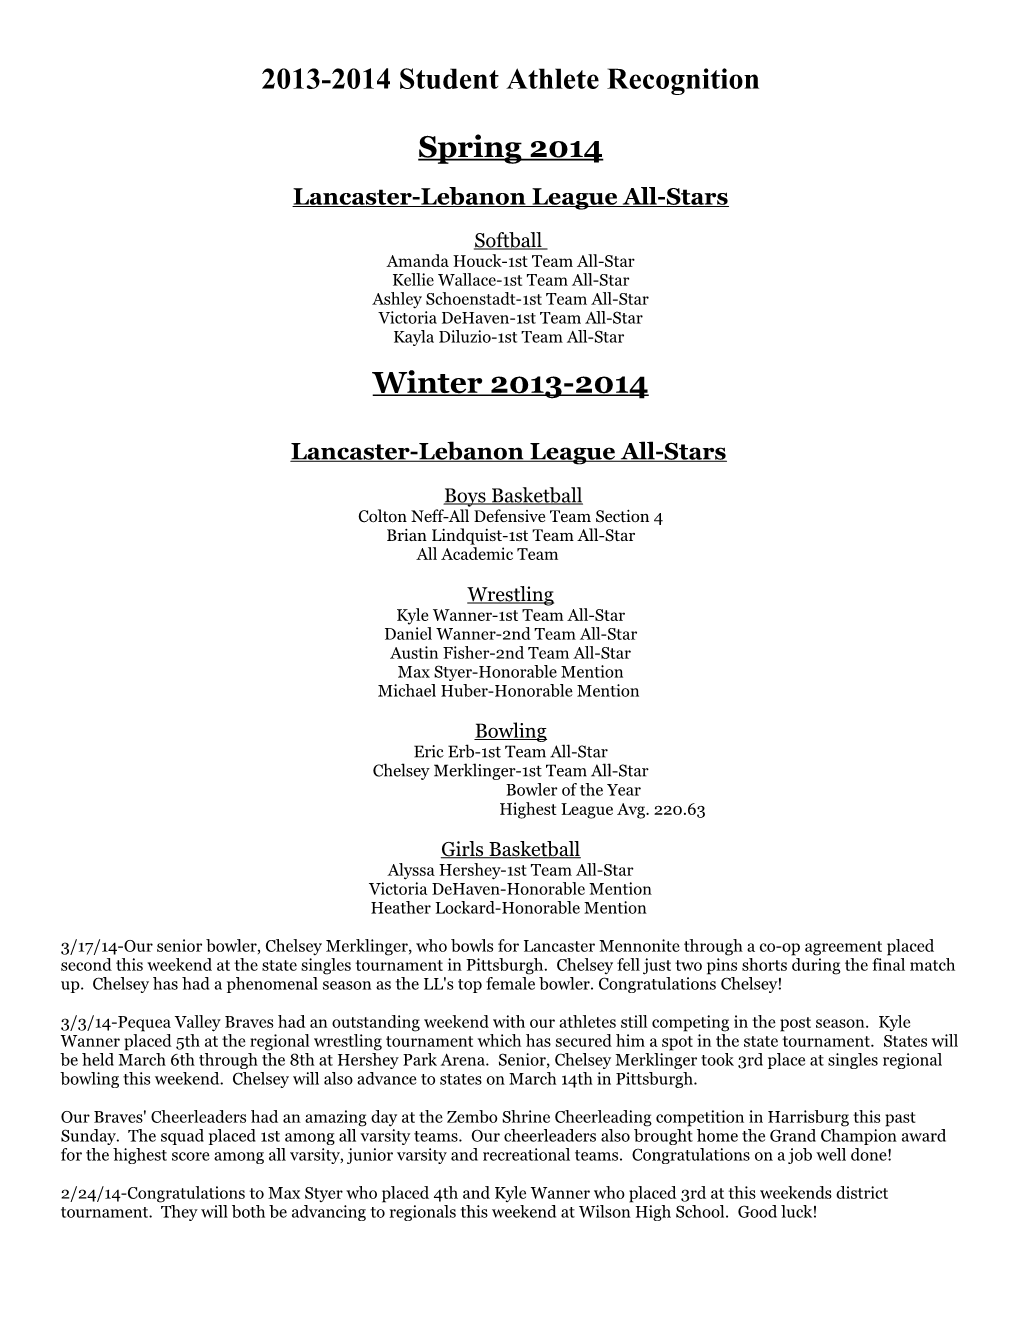 Lancaster-Lebanon League All-Stars